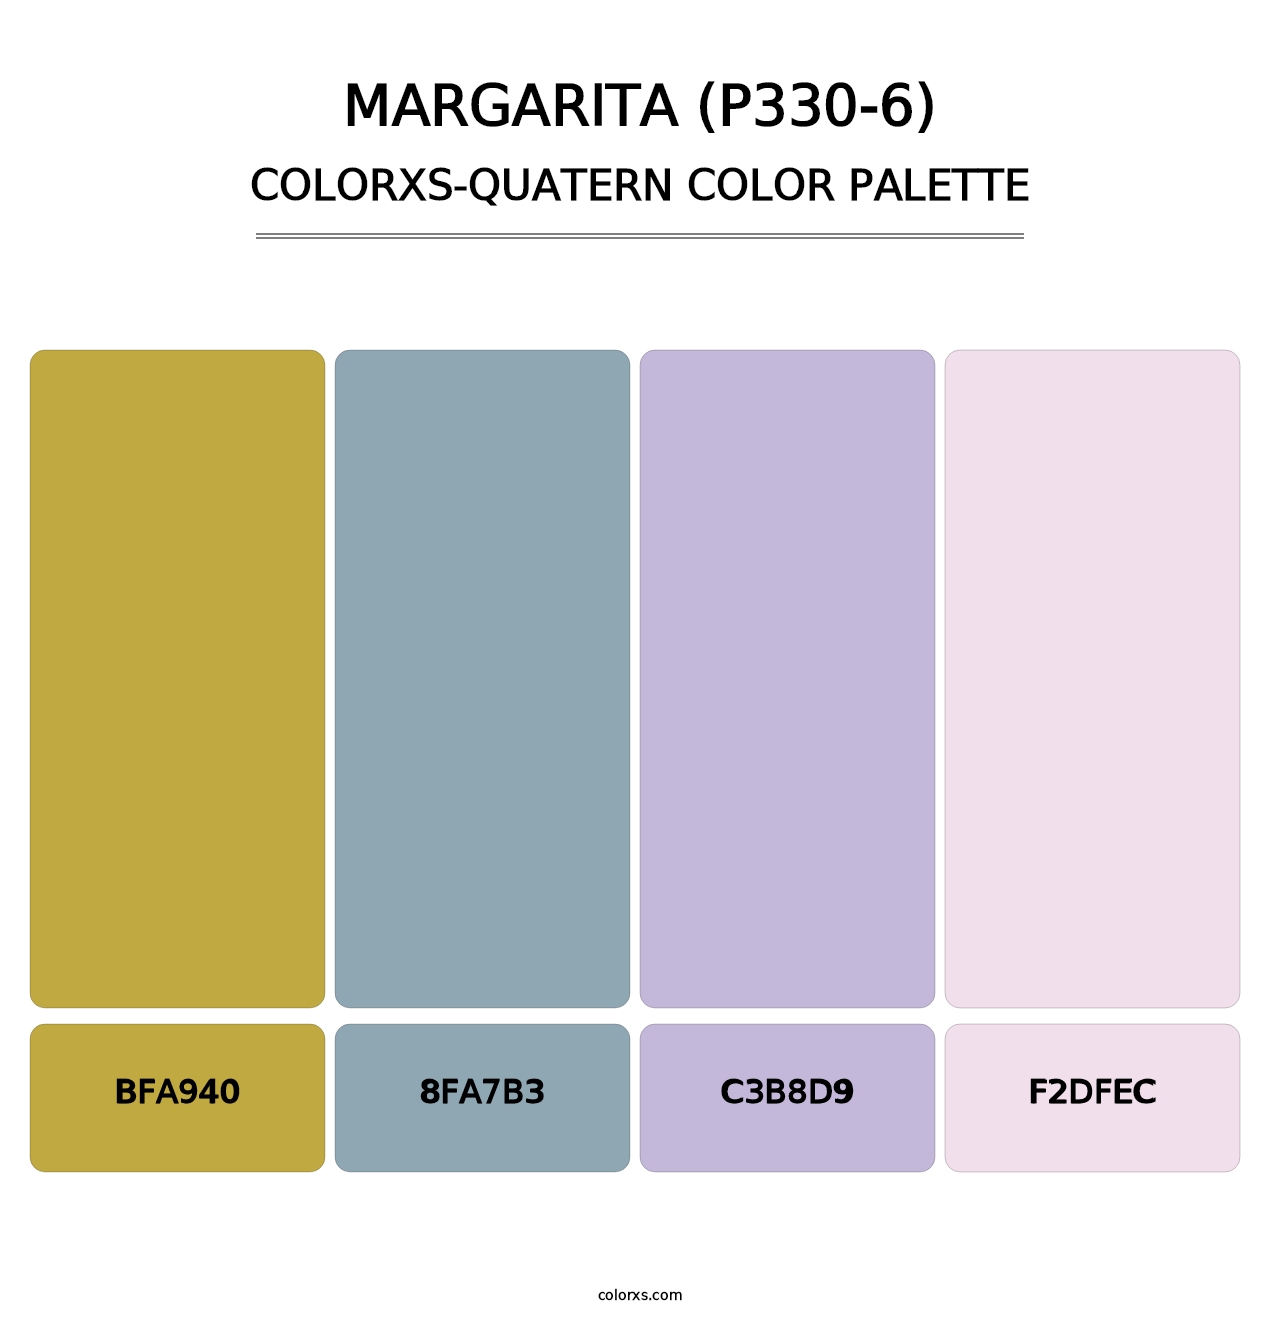 Margarita (P330-6) - Colorxs Quatern Palette